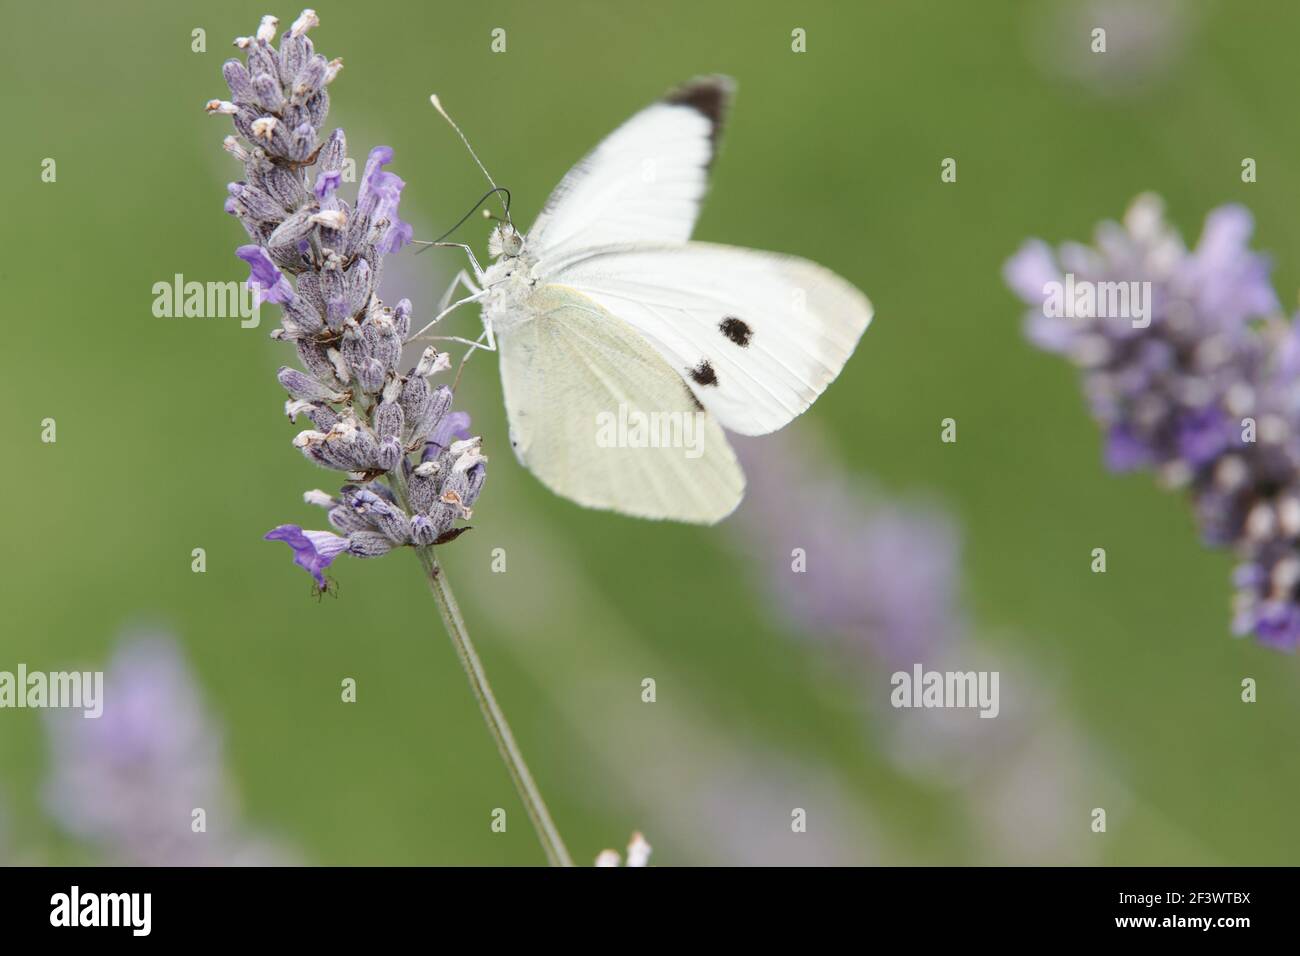 Large White Butterfly - female feeding on Lavender flowerPieris brassicae Essex, UK IN000808 Stock Photo